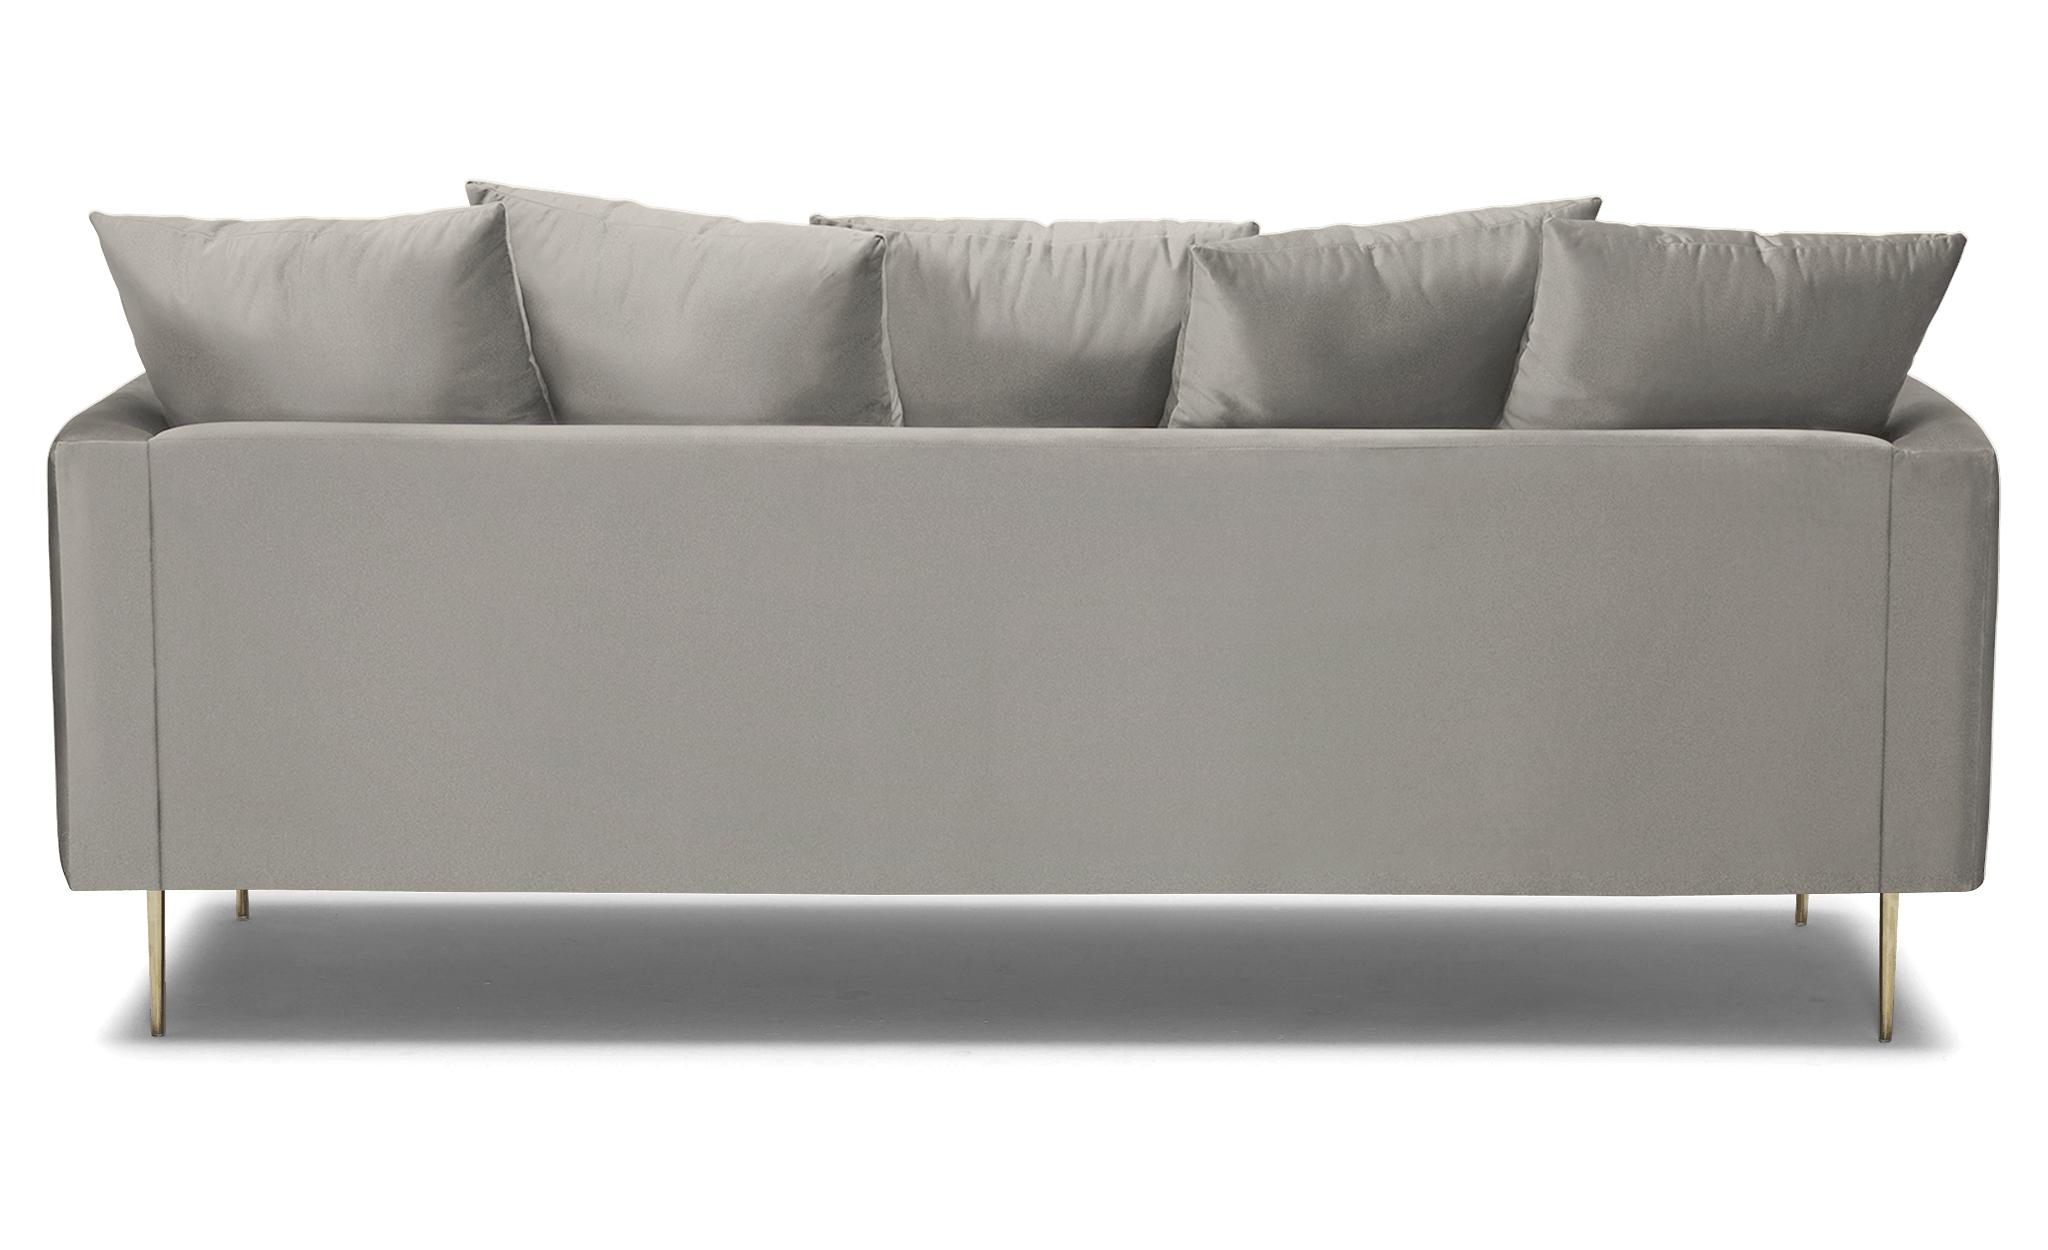 White Aime Mid Century Modern Sofa - Bloke Cotton - Image 4